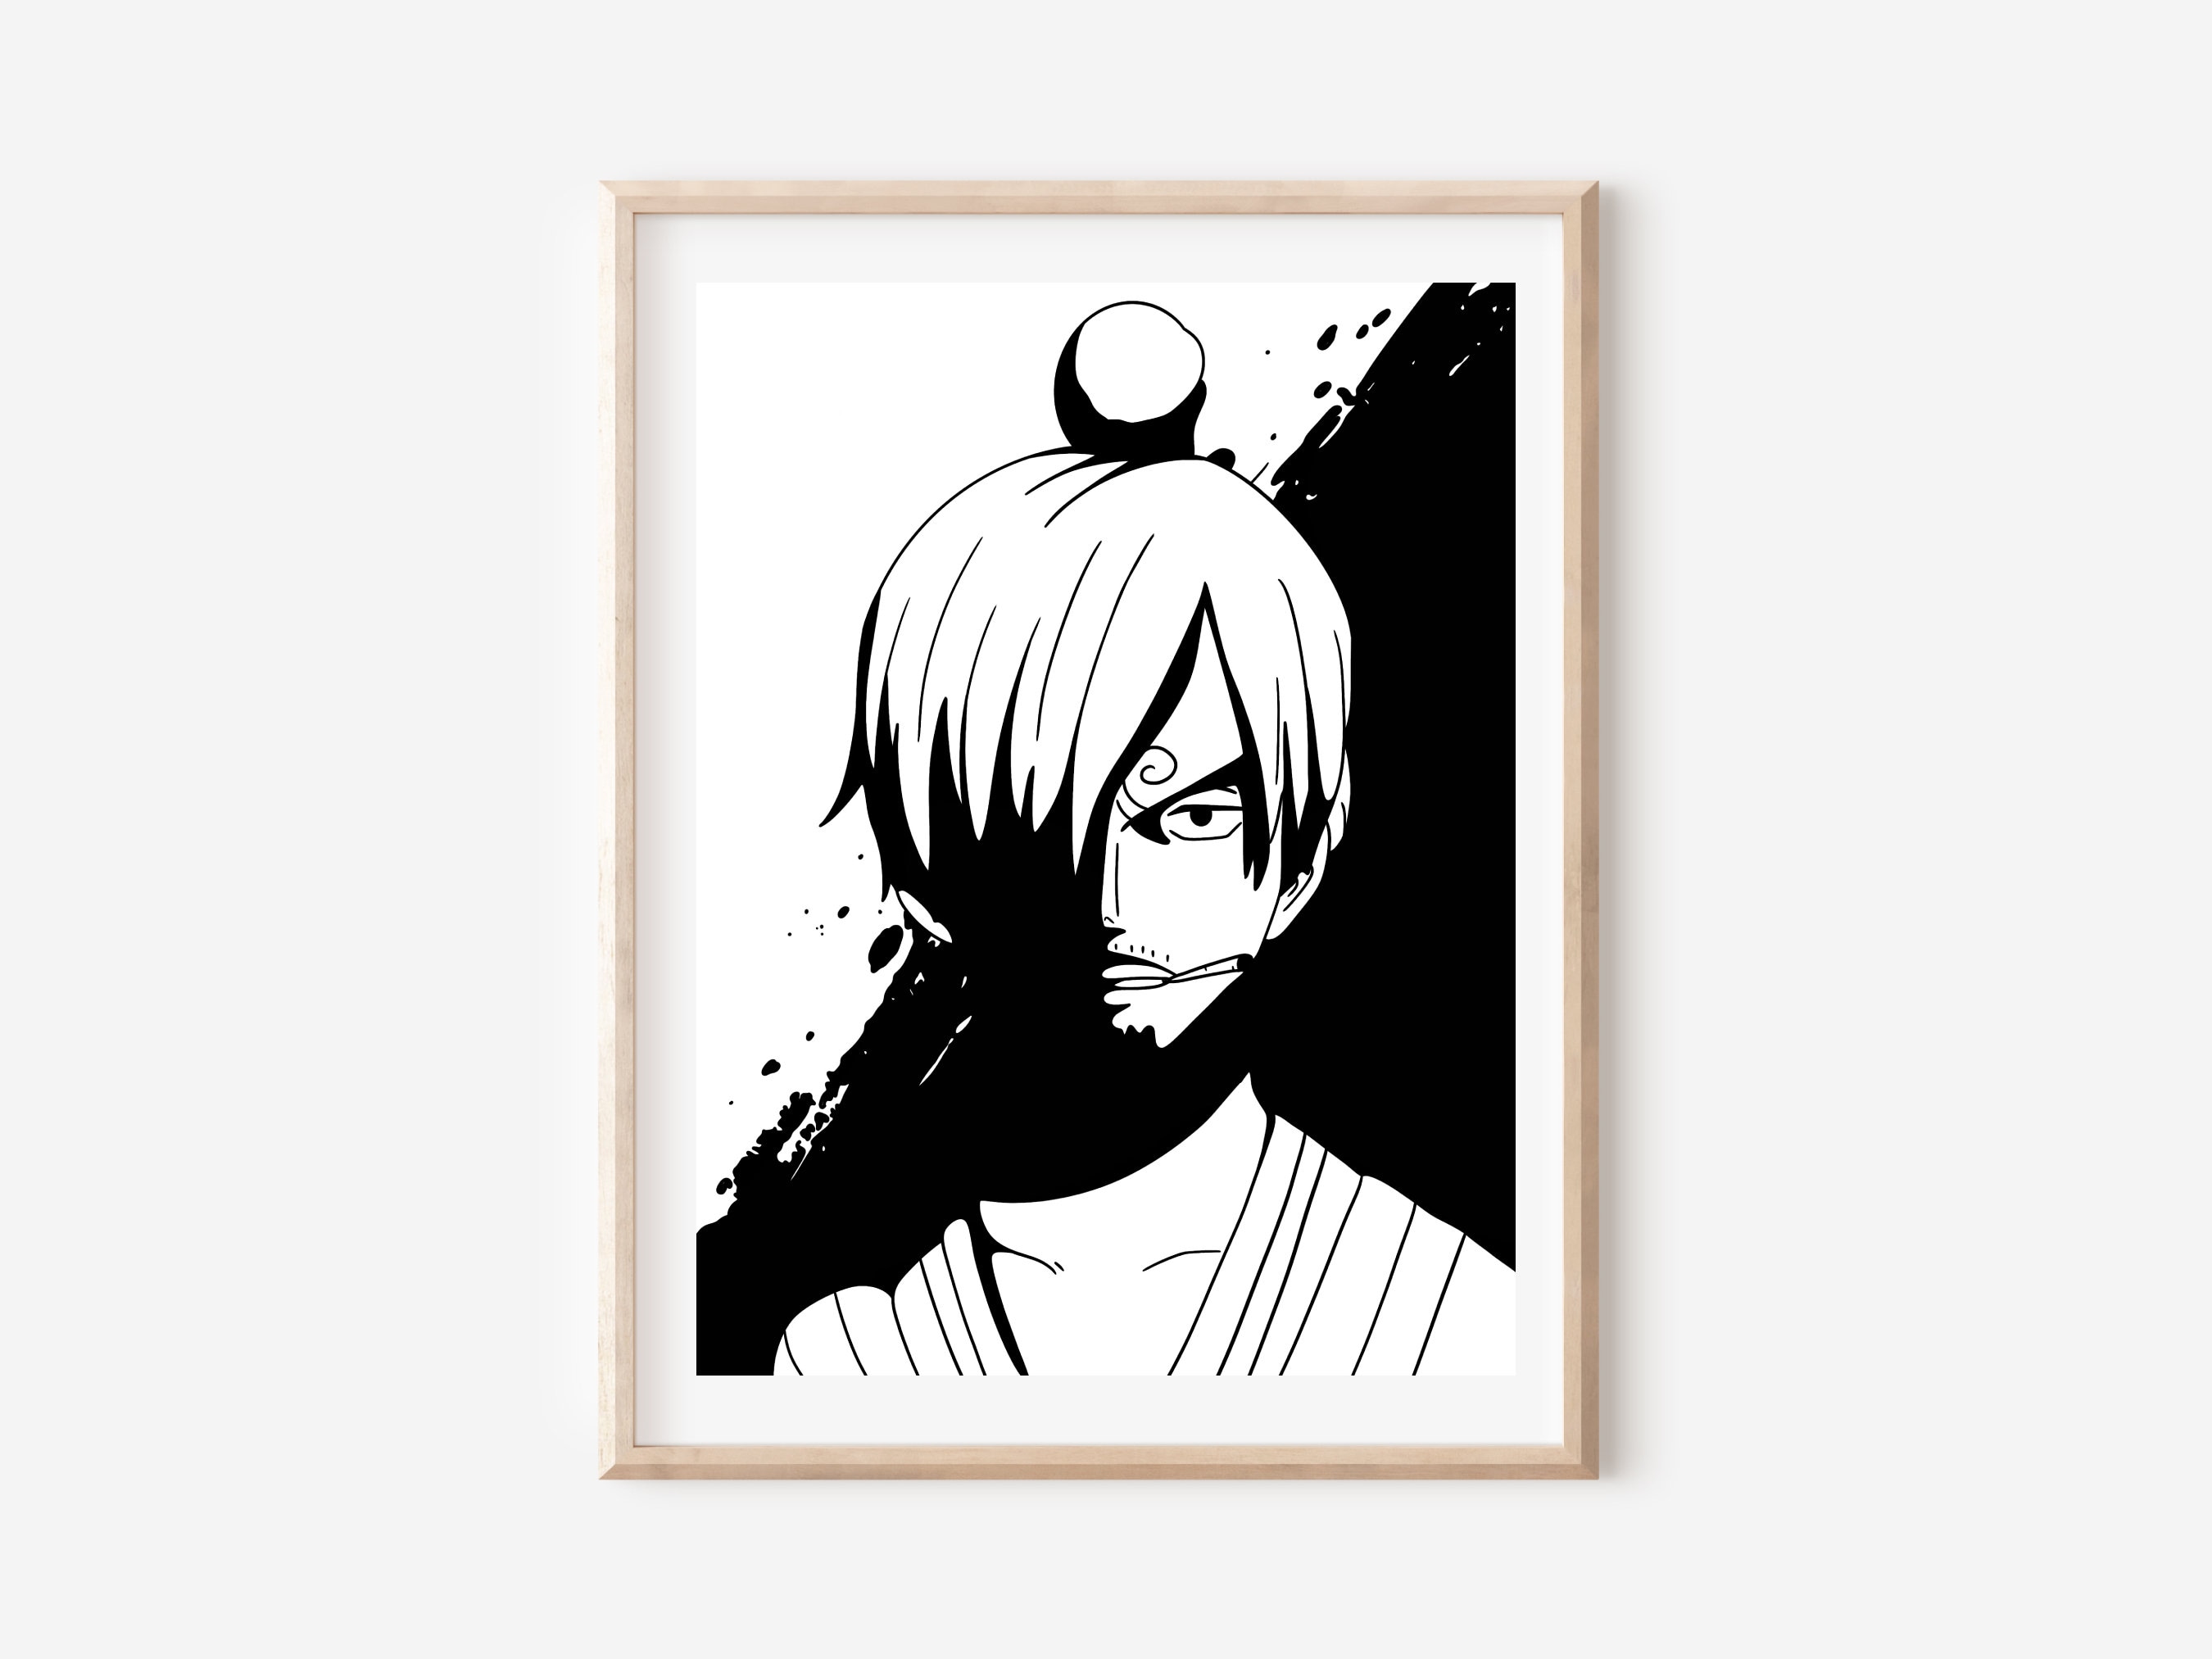 anime art and black and white  image 2947271 on Favimcom